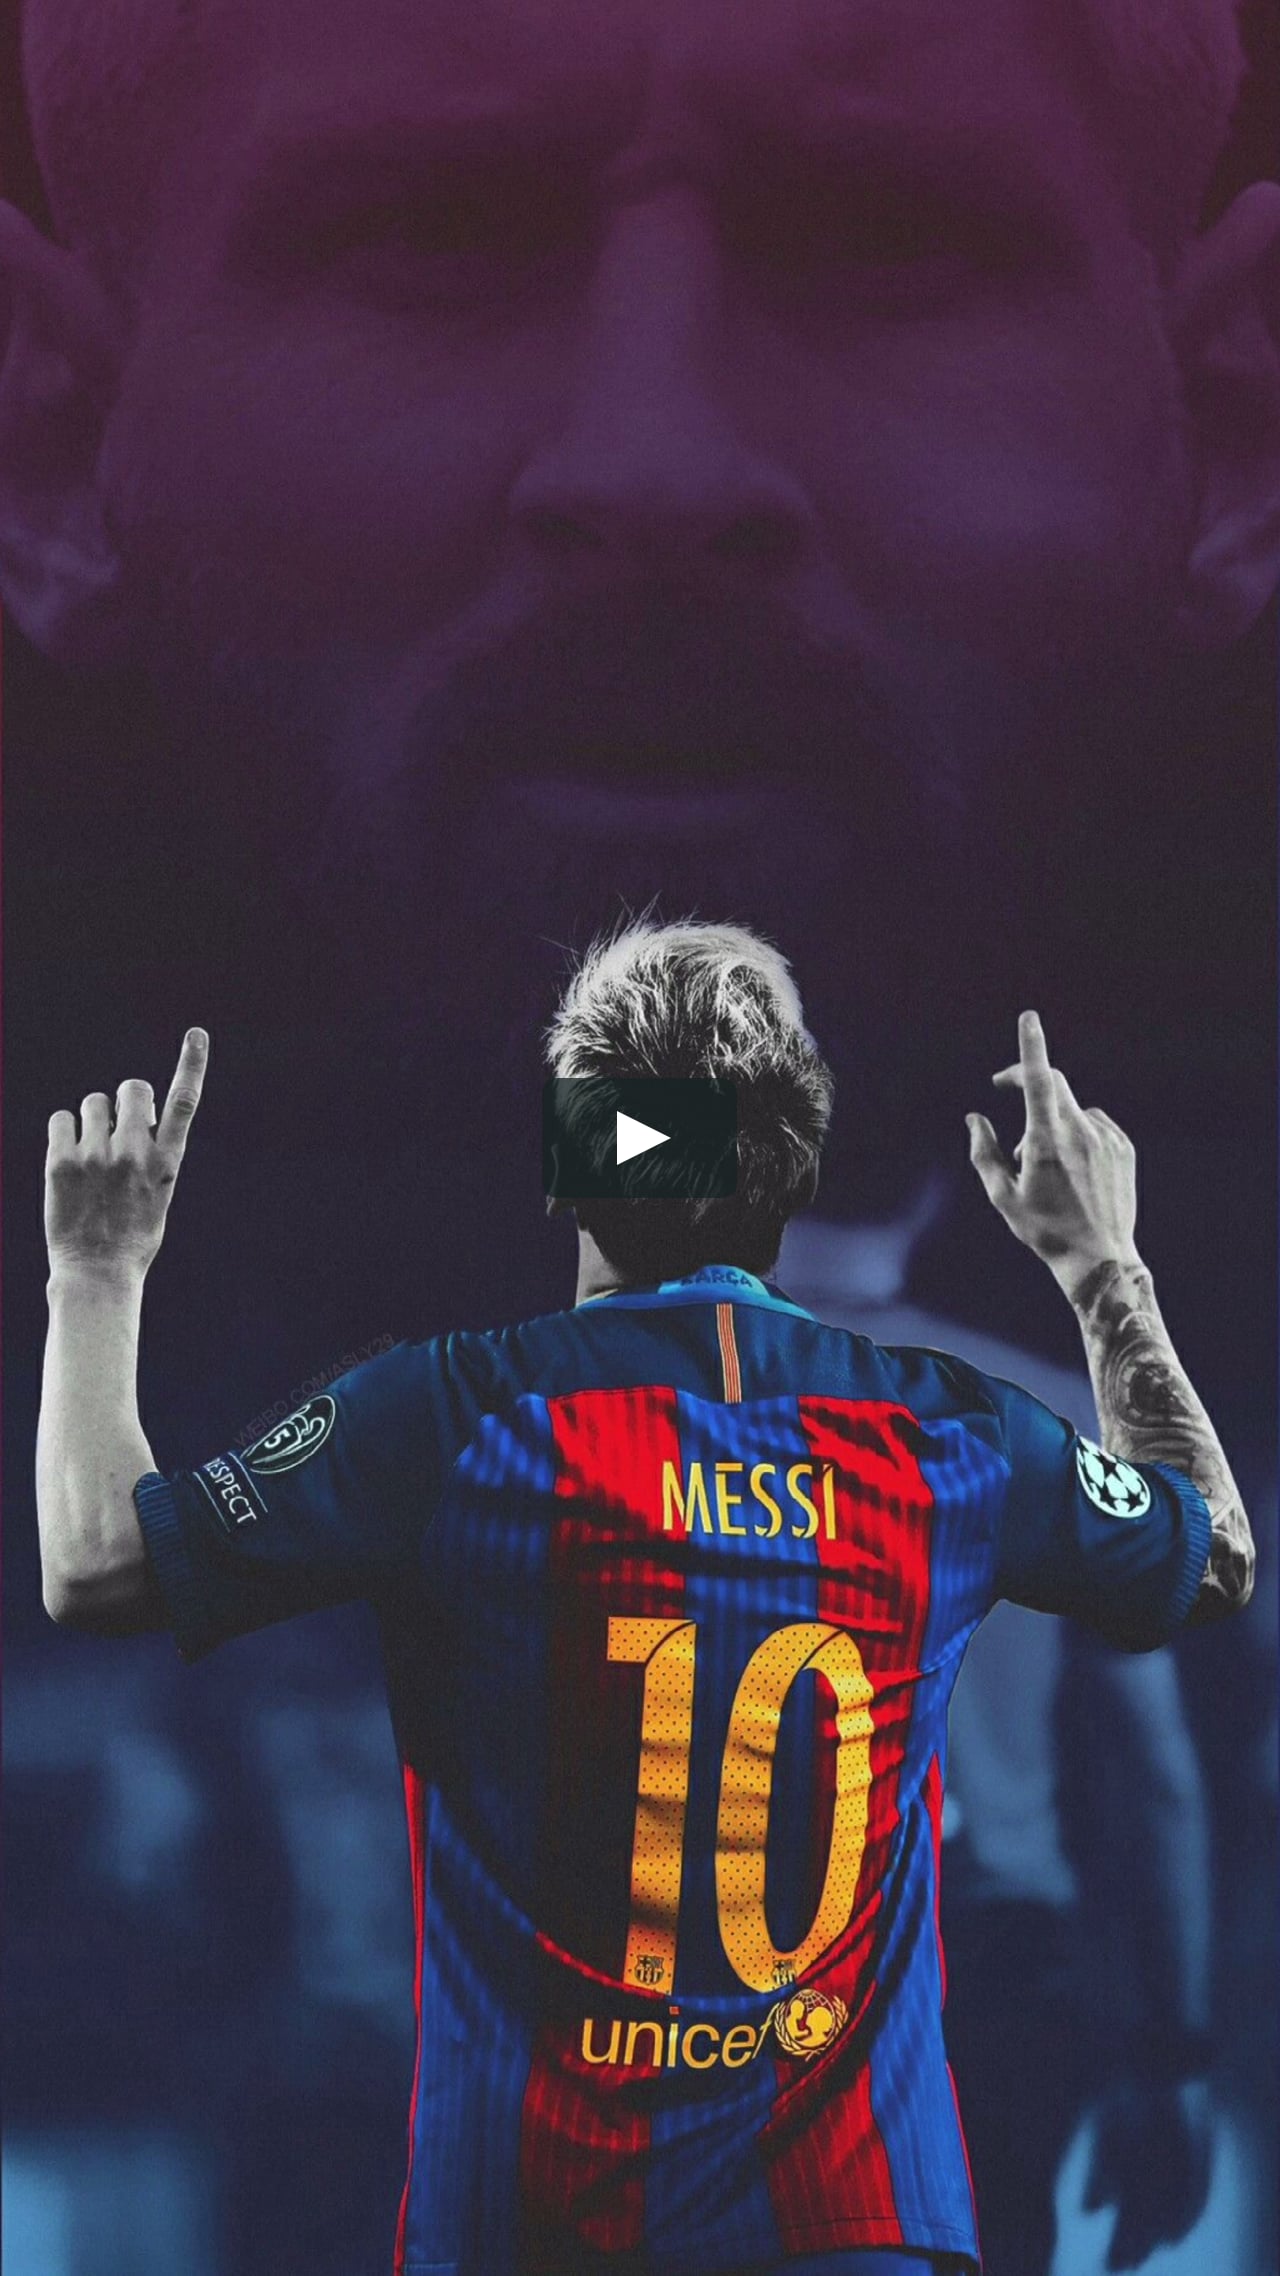 Messi Live Wallpaper on Vimeo